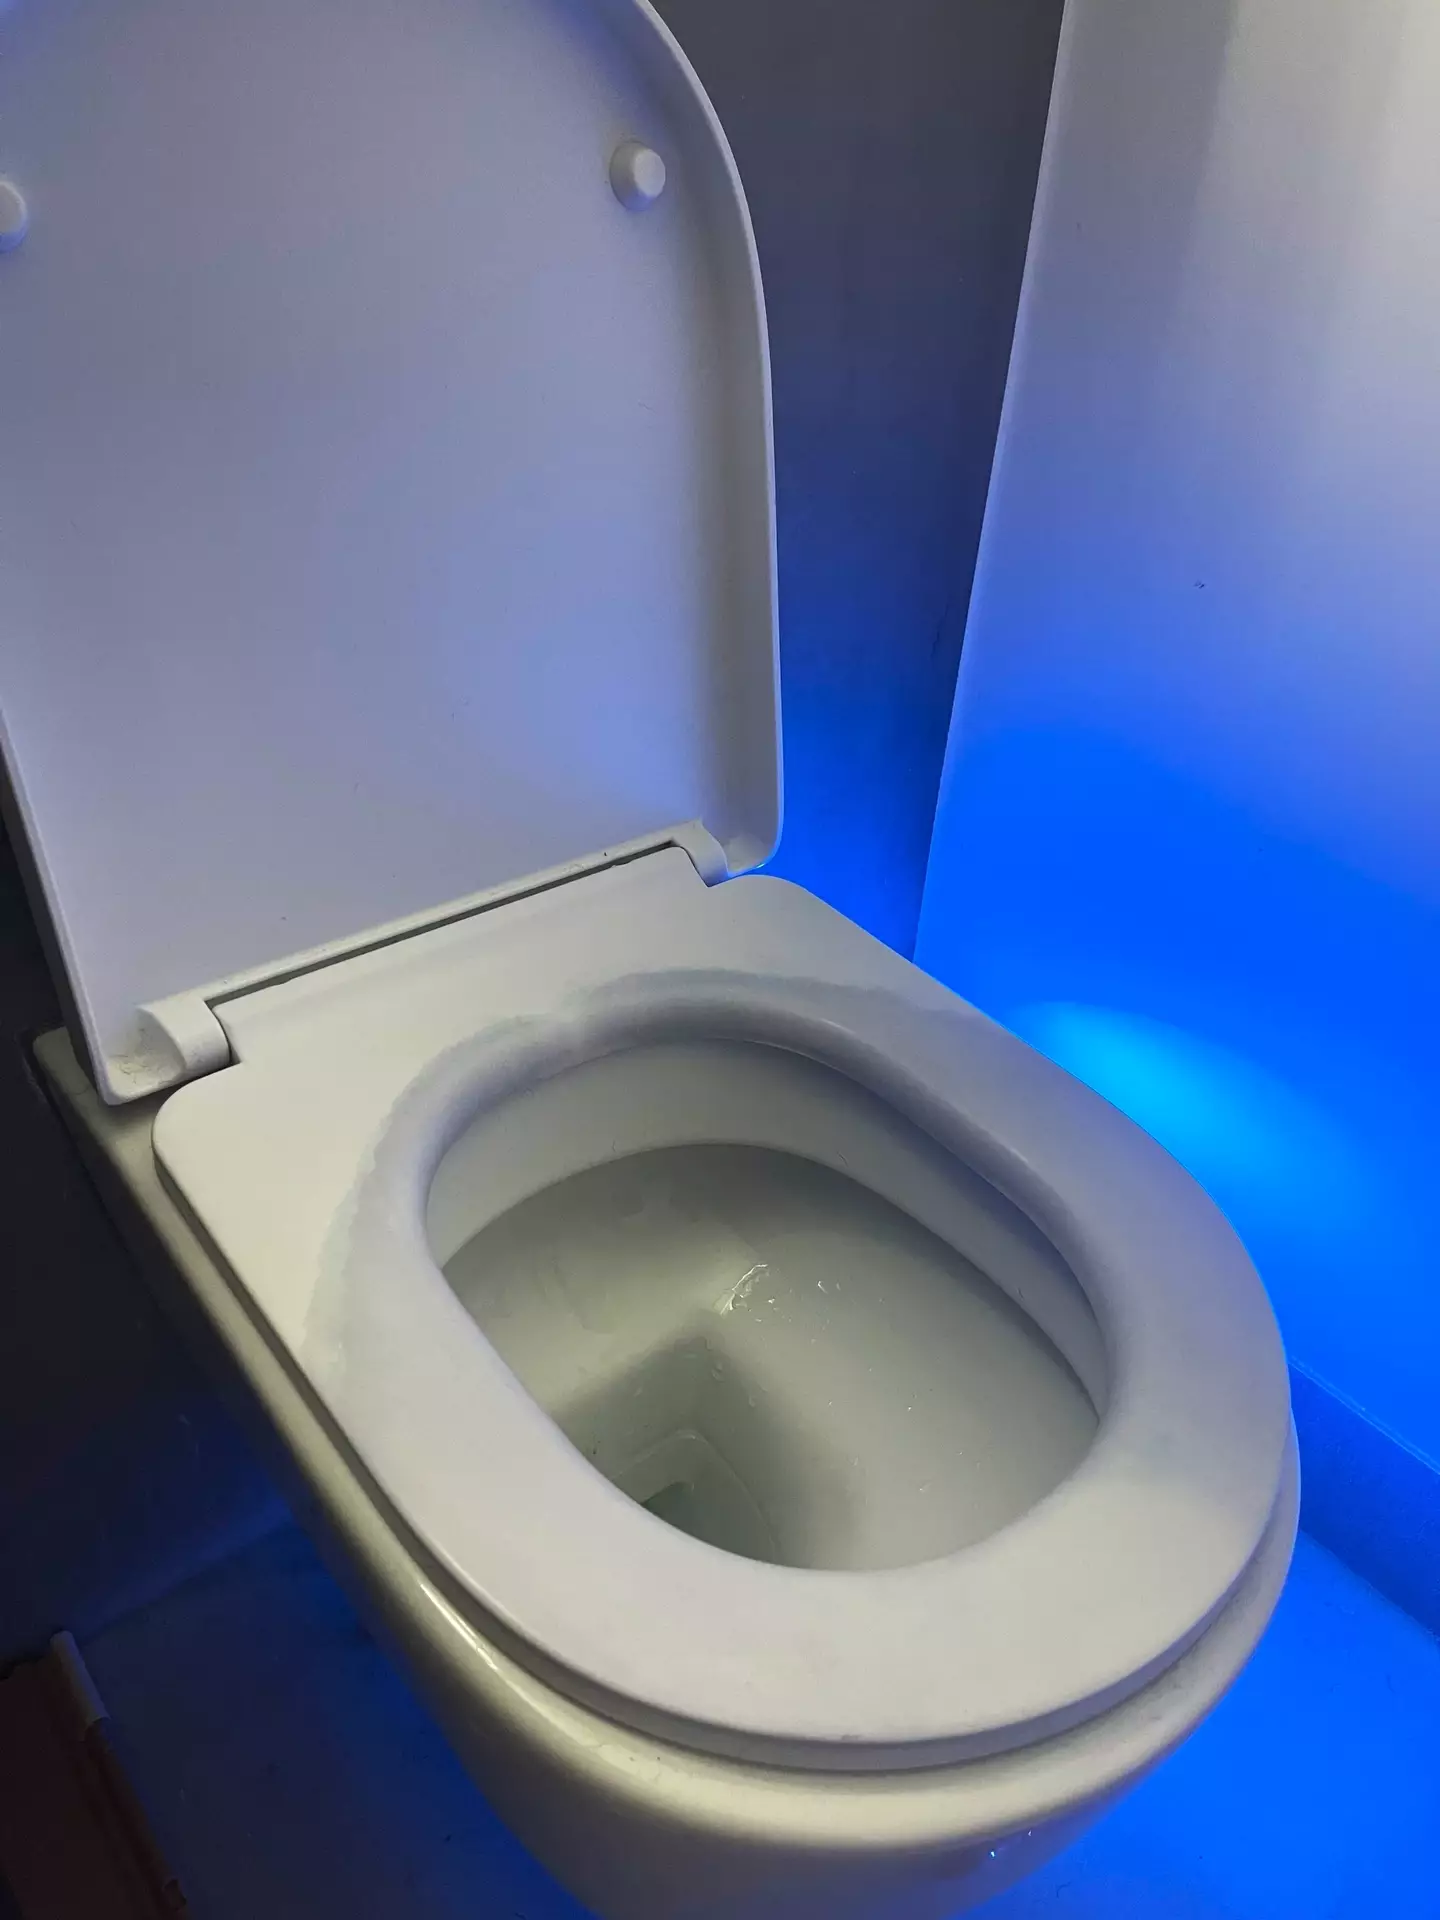 Keisha's toilet even turned blue.